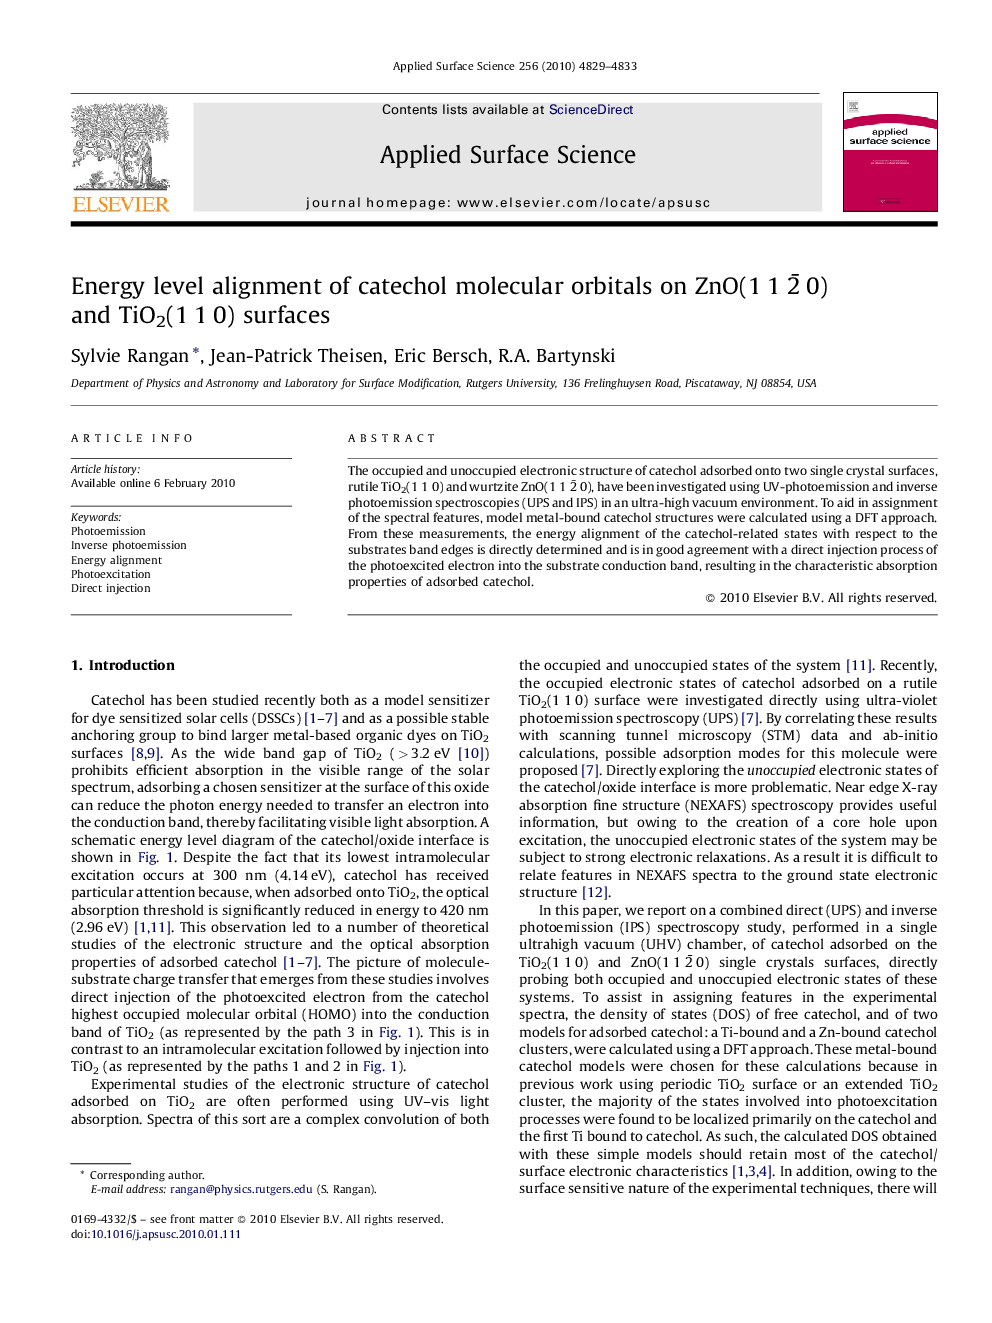 Energy level alignment of catechol molecular orbitals on ZnO(1Â 1Â 2Â¯Â 0) and TiO2(1Â 1Â 0) surfaces